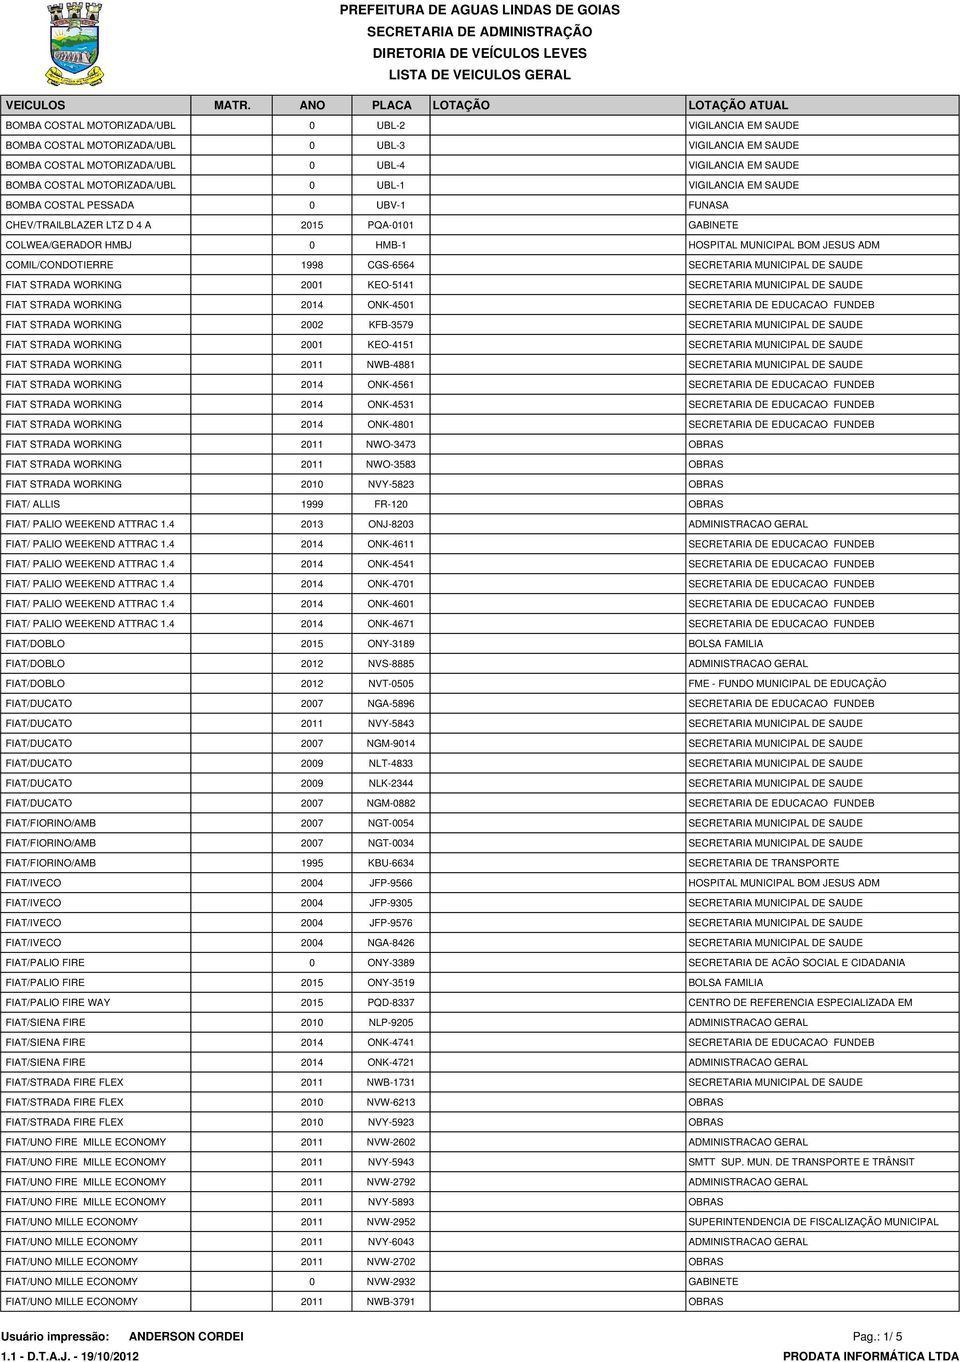 BOMBA COSTAL MOTORIZADA/UBL 0 UBL-1 VIGILANCIA EM SAUDE BOMBA COSTAL PESSADA 0 UBV-1 FUNASA CHEV/TRAILBLAZER LTZ D 4 A 2015 PQA-0101 GABINETE COLWEA/GERADOR HMBJ 0 HMB-1 HOSPITAL MUNICIPAL BOM JESUS